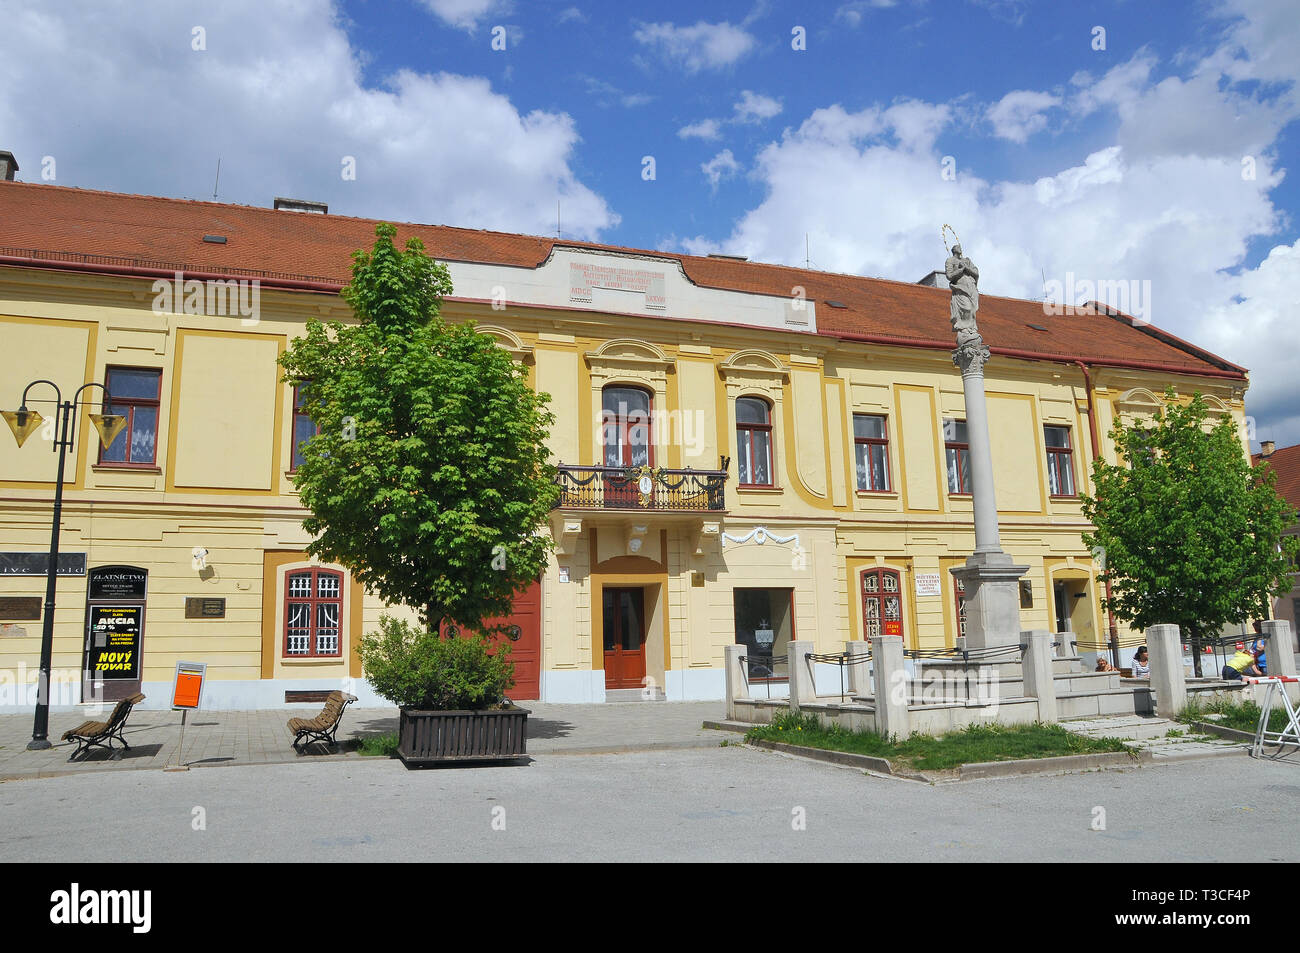 Palacio del Obispo, Biskupský palác, Rožňava, Eslovaquia. Püspöki palota, Rozsnyó, Szlovákia. Foto de stock